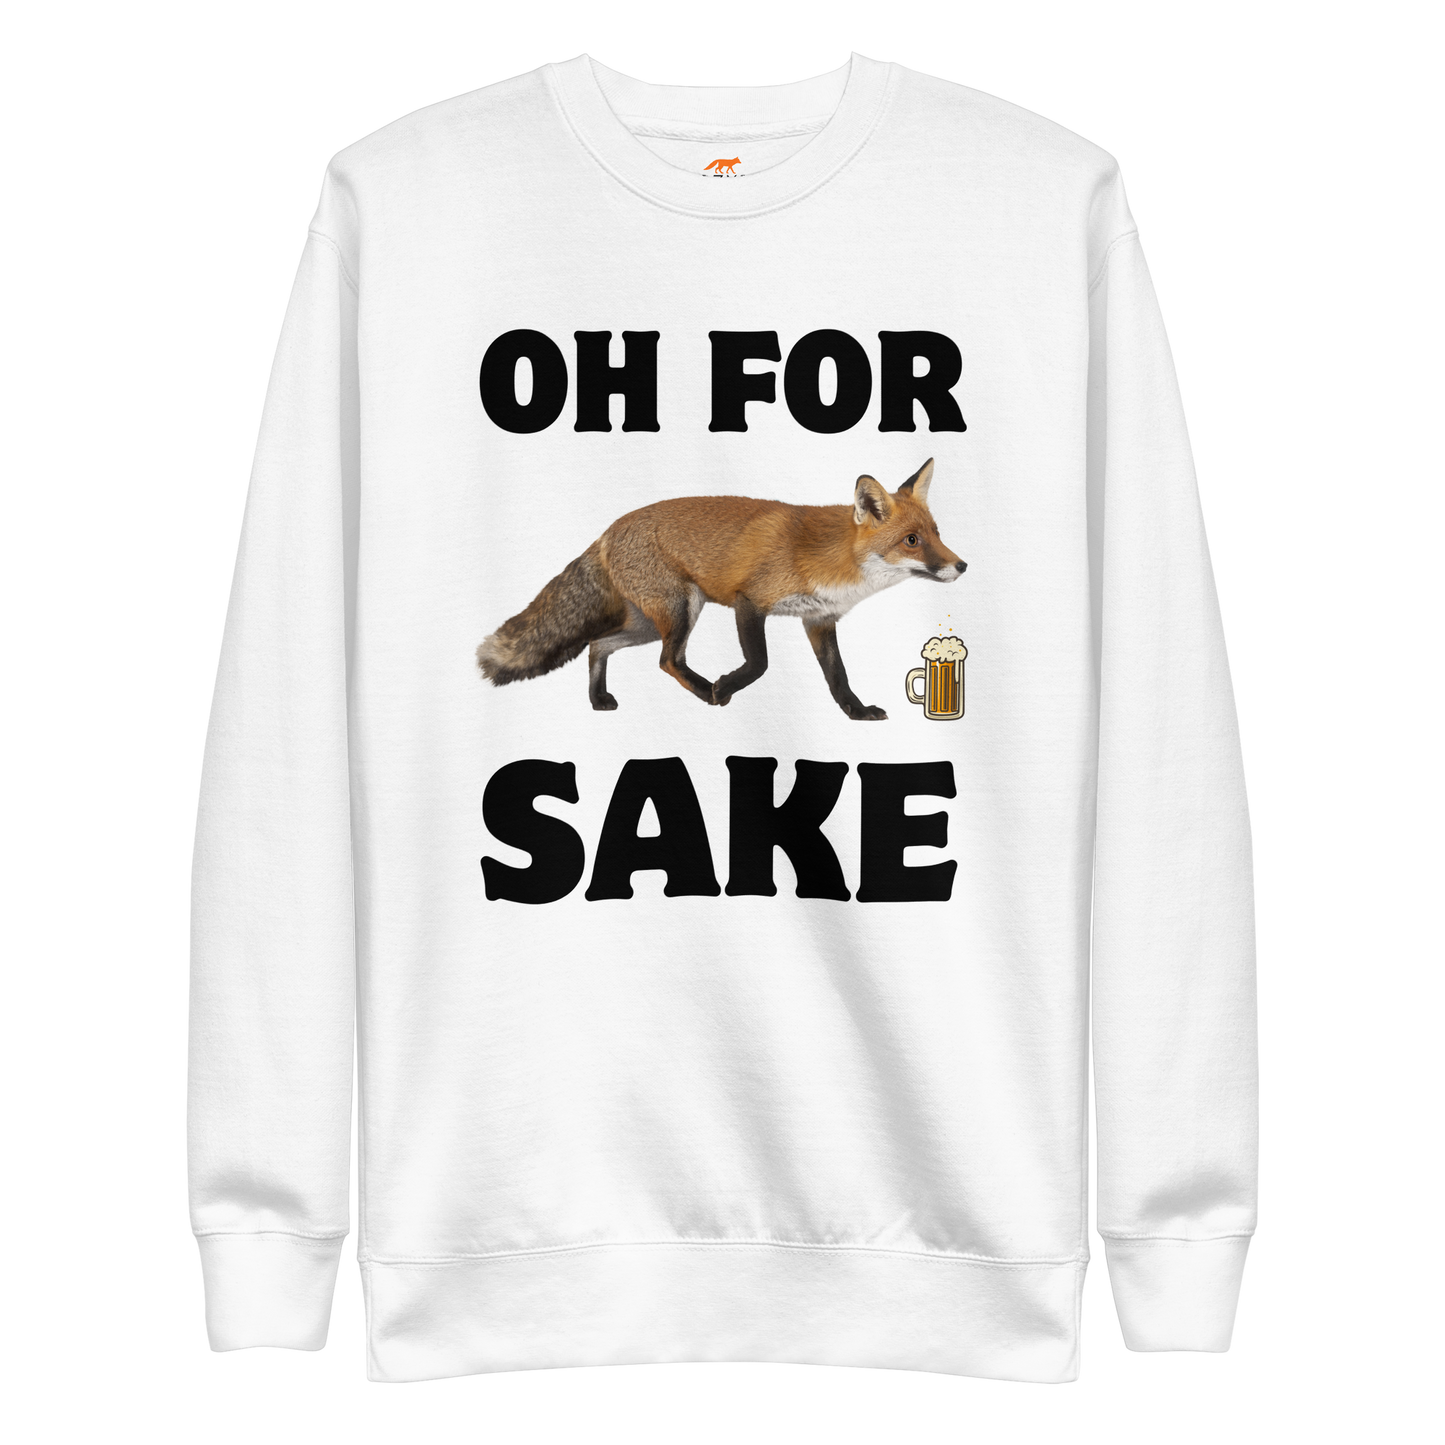 White Premium Fox Sweatshirt featuring a Oh For Fox Sake graphic on the chest - Funny Graphic Fox Sweatshirts - Boozy Fox